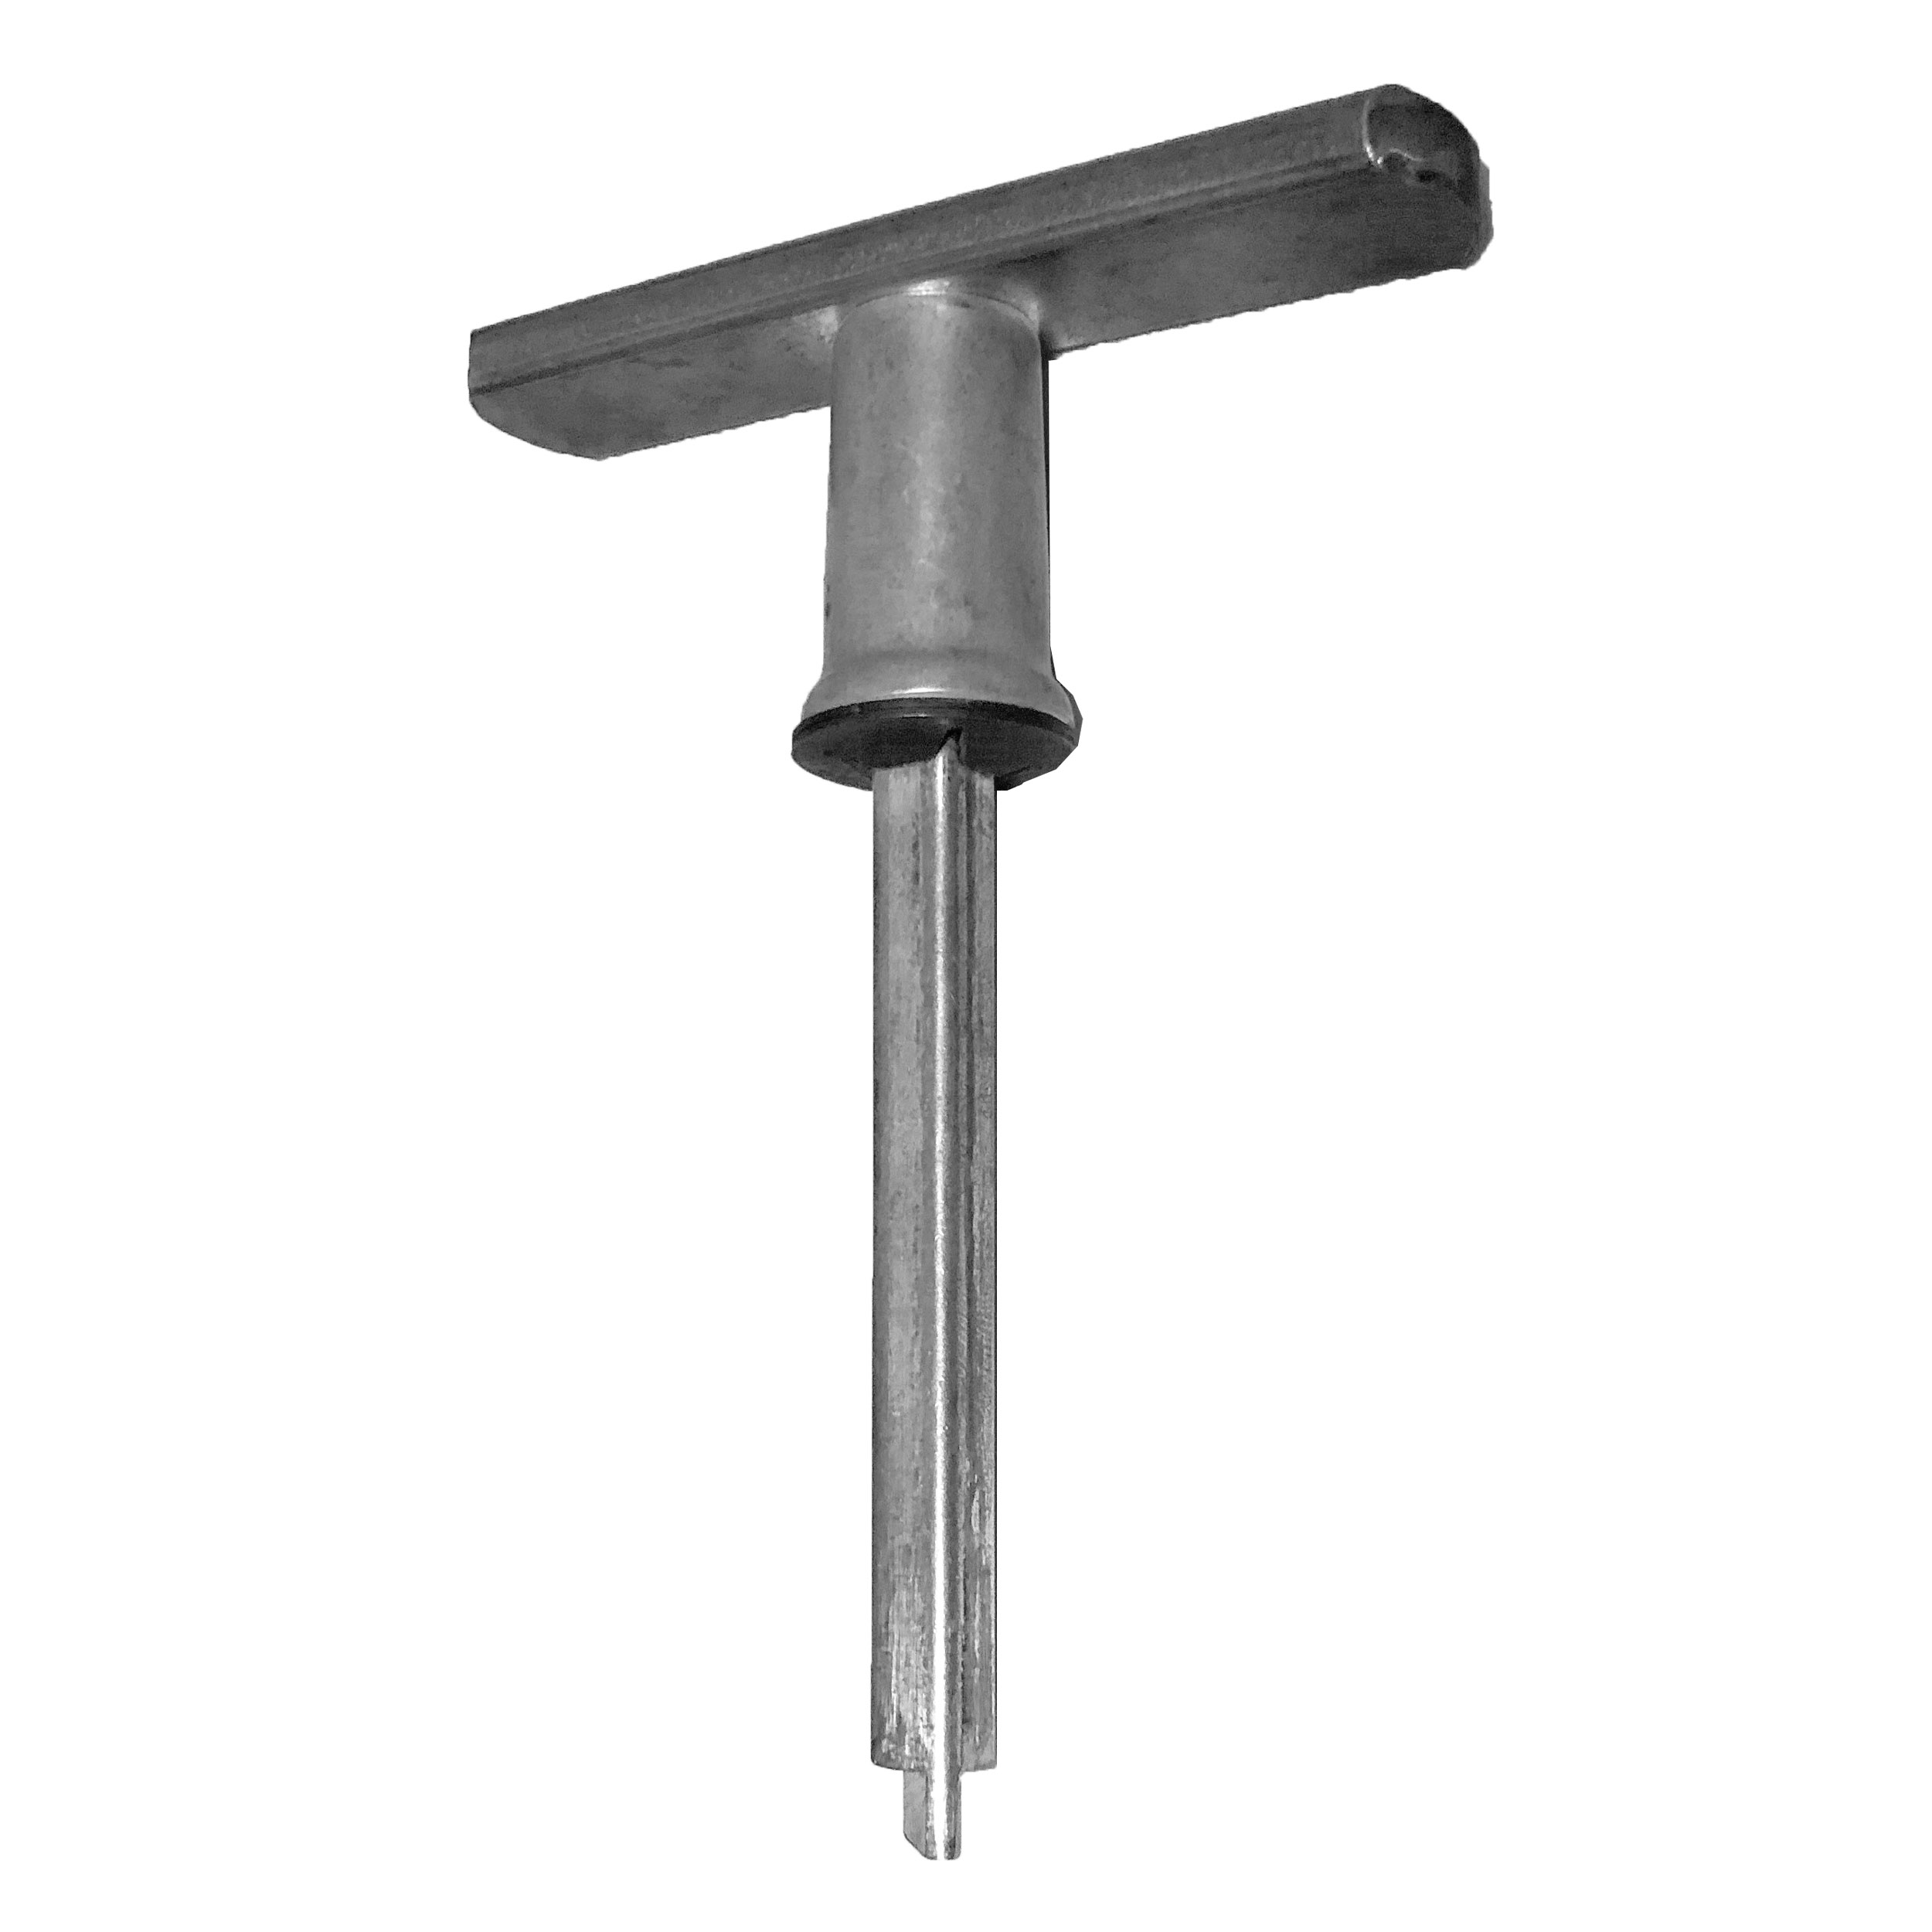 Acudor Replacement slam lock key